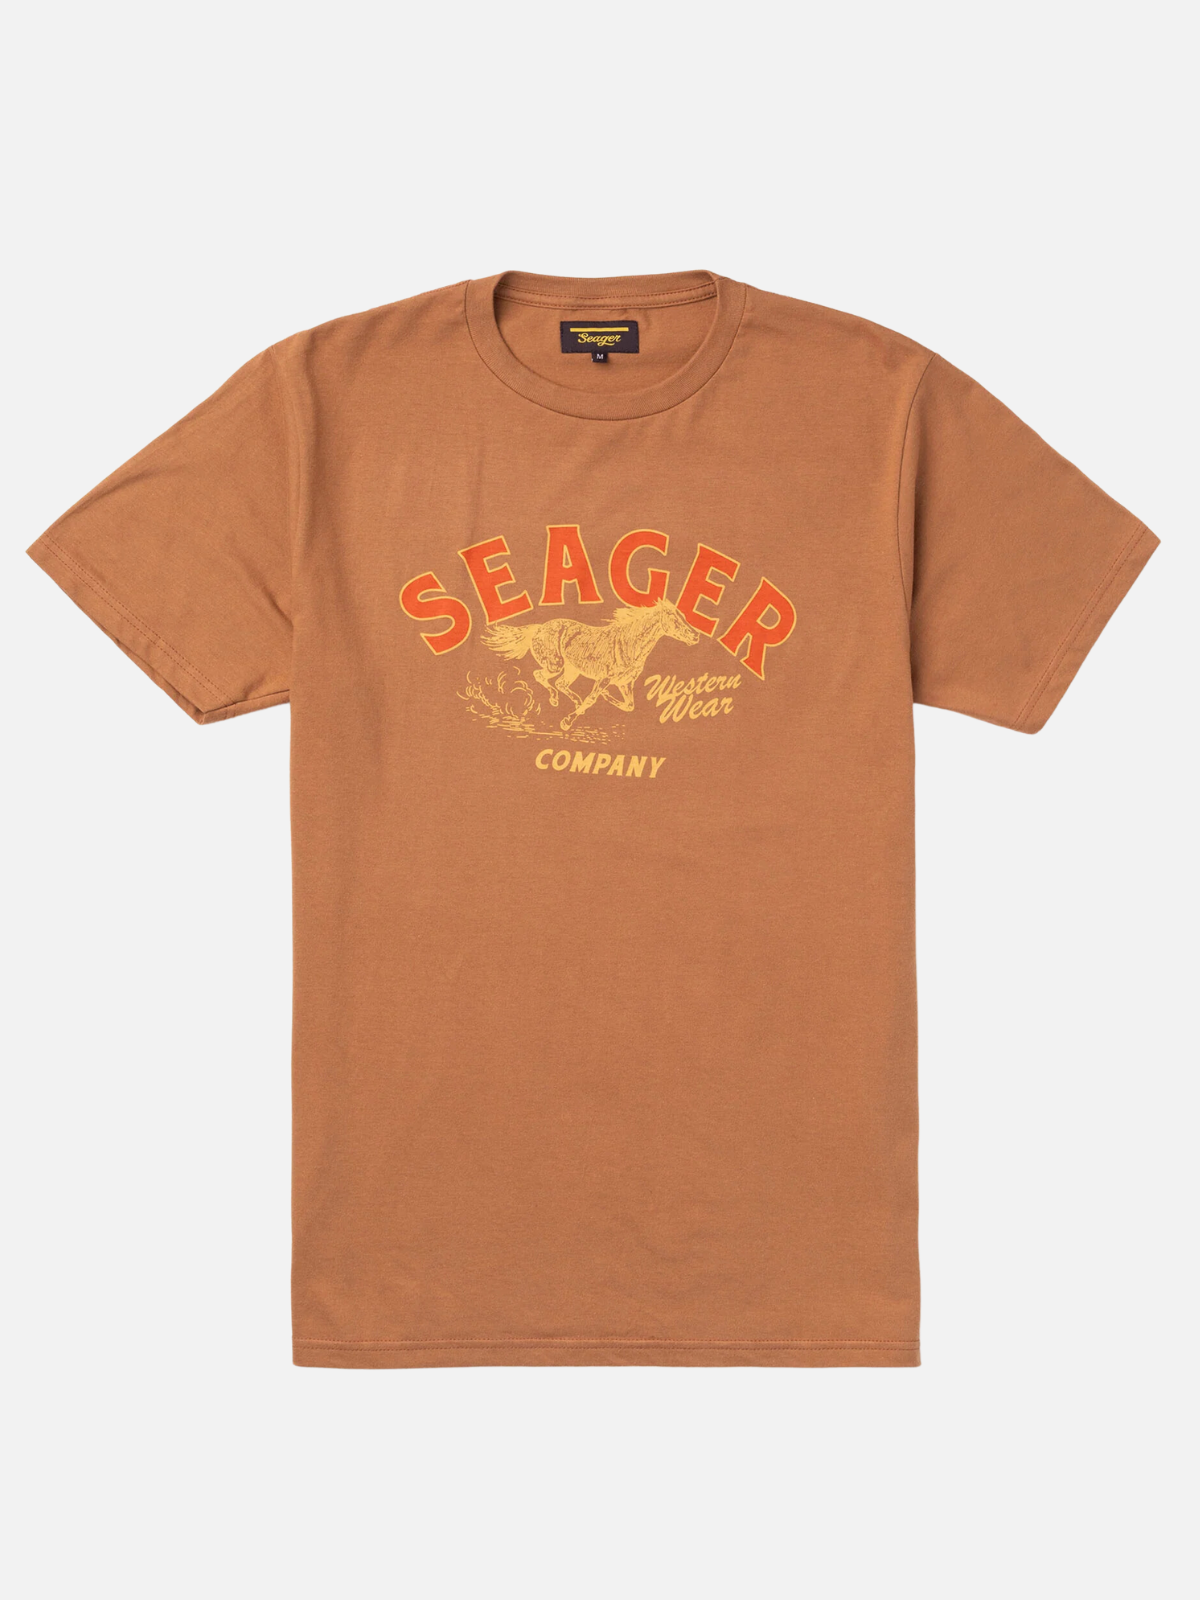 seager heritage tee brown tan red orange 100% cotton graphic t-shirt kempt athens ga georgia men's clothing store